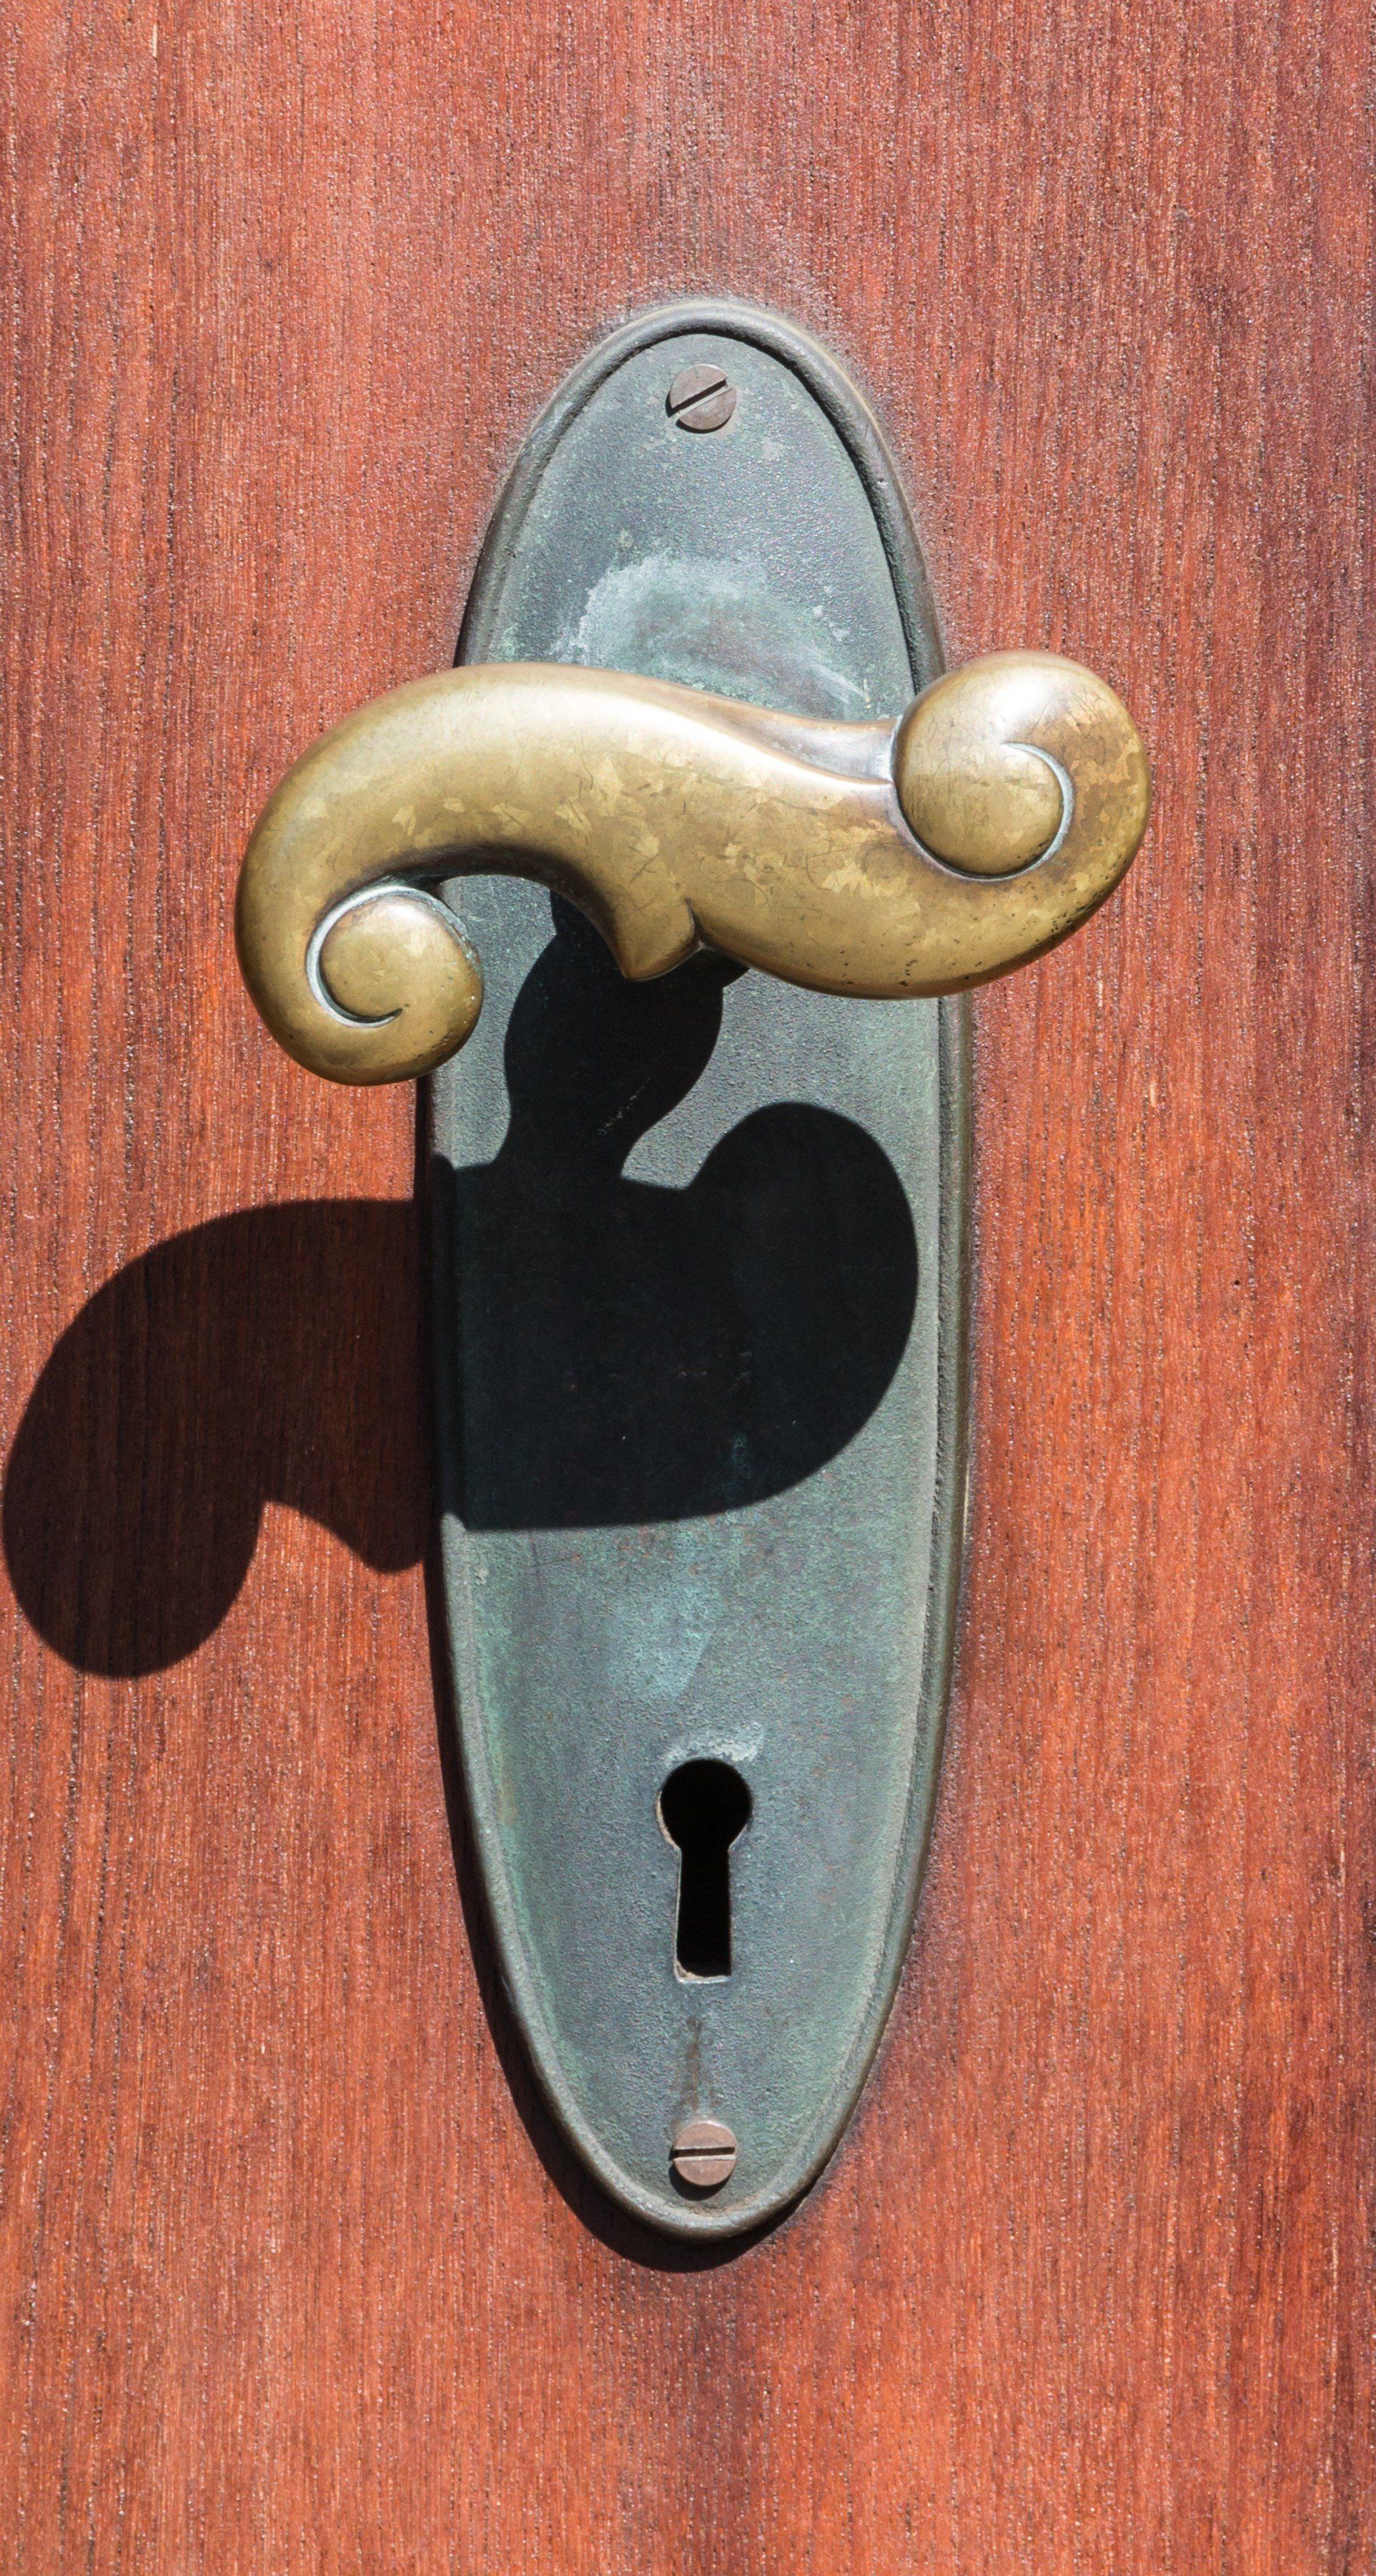 Copper door handle with antimicrobial properties